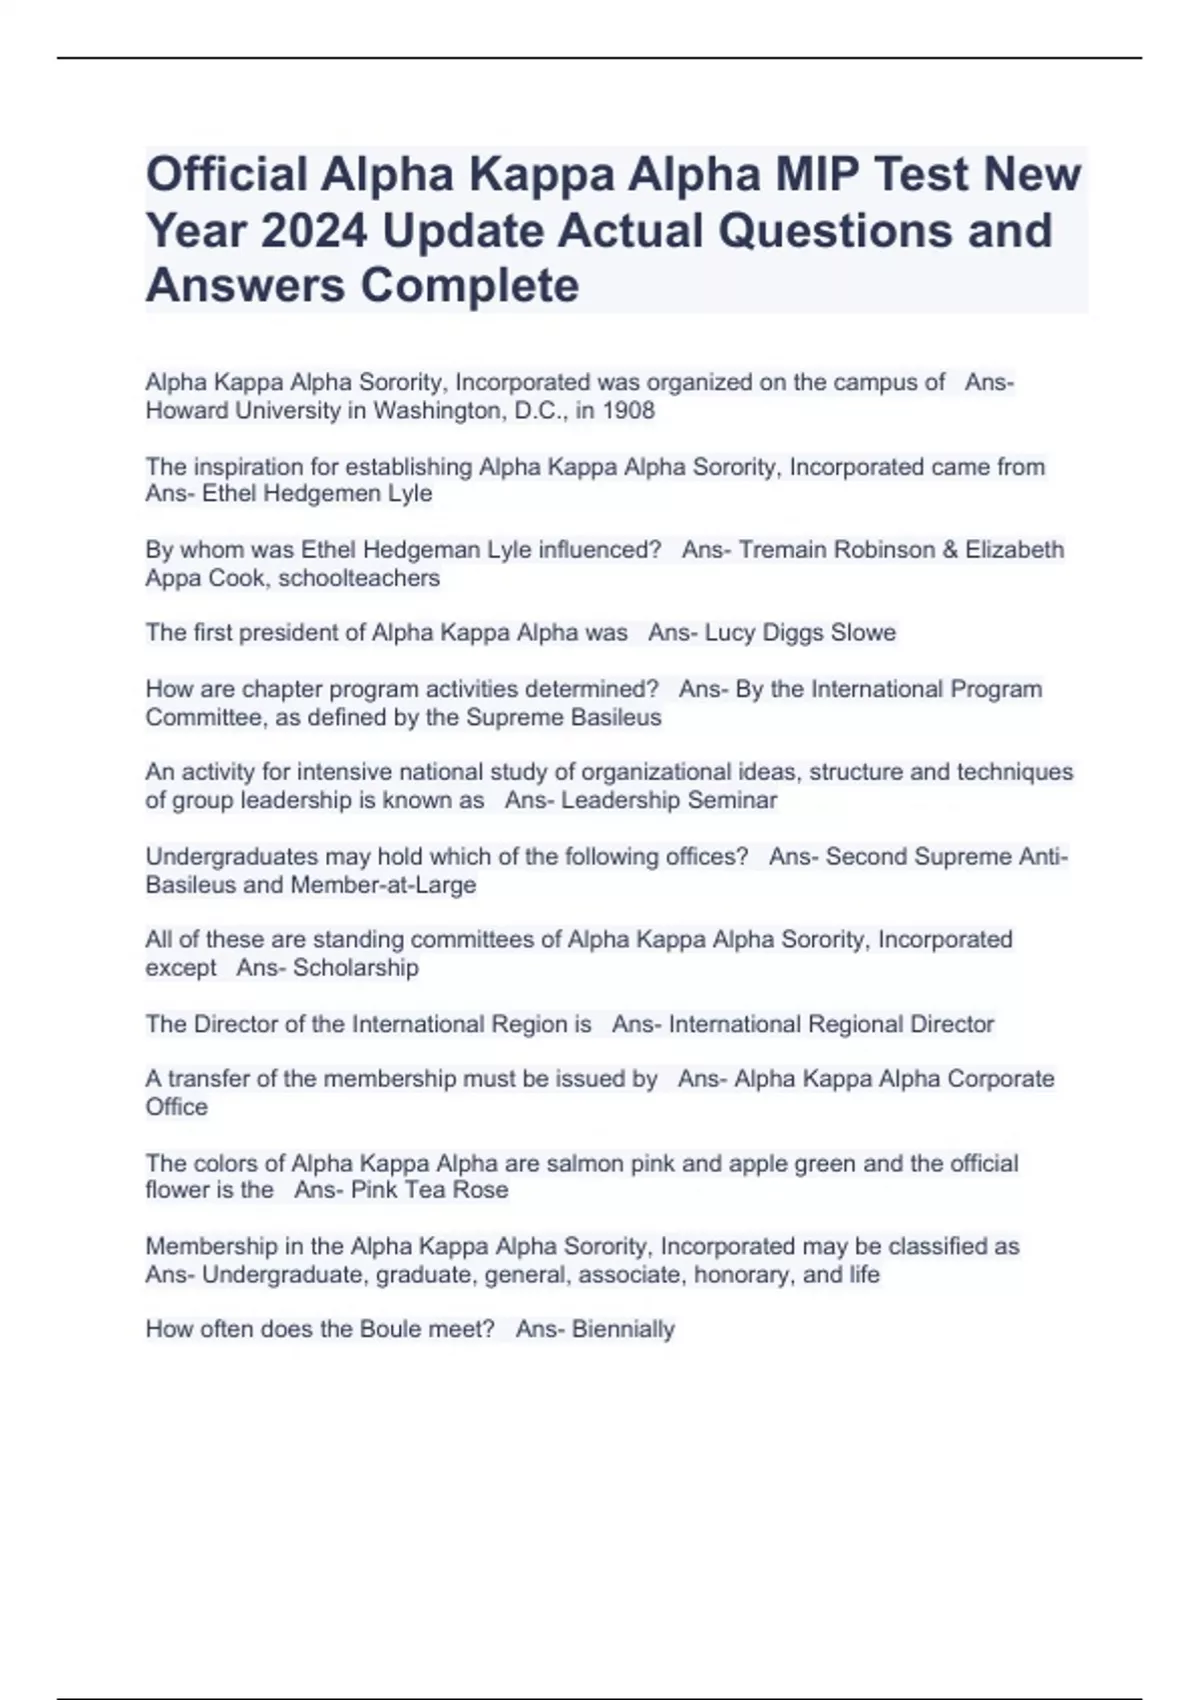 Official Alpha Kappa Alpha MIP Test New Year 2024 Update Actual